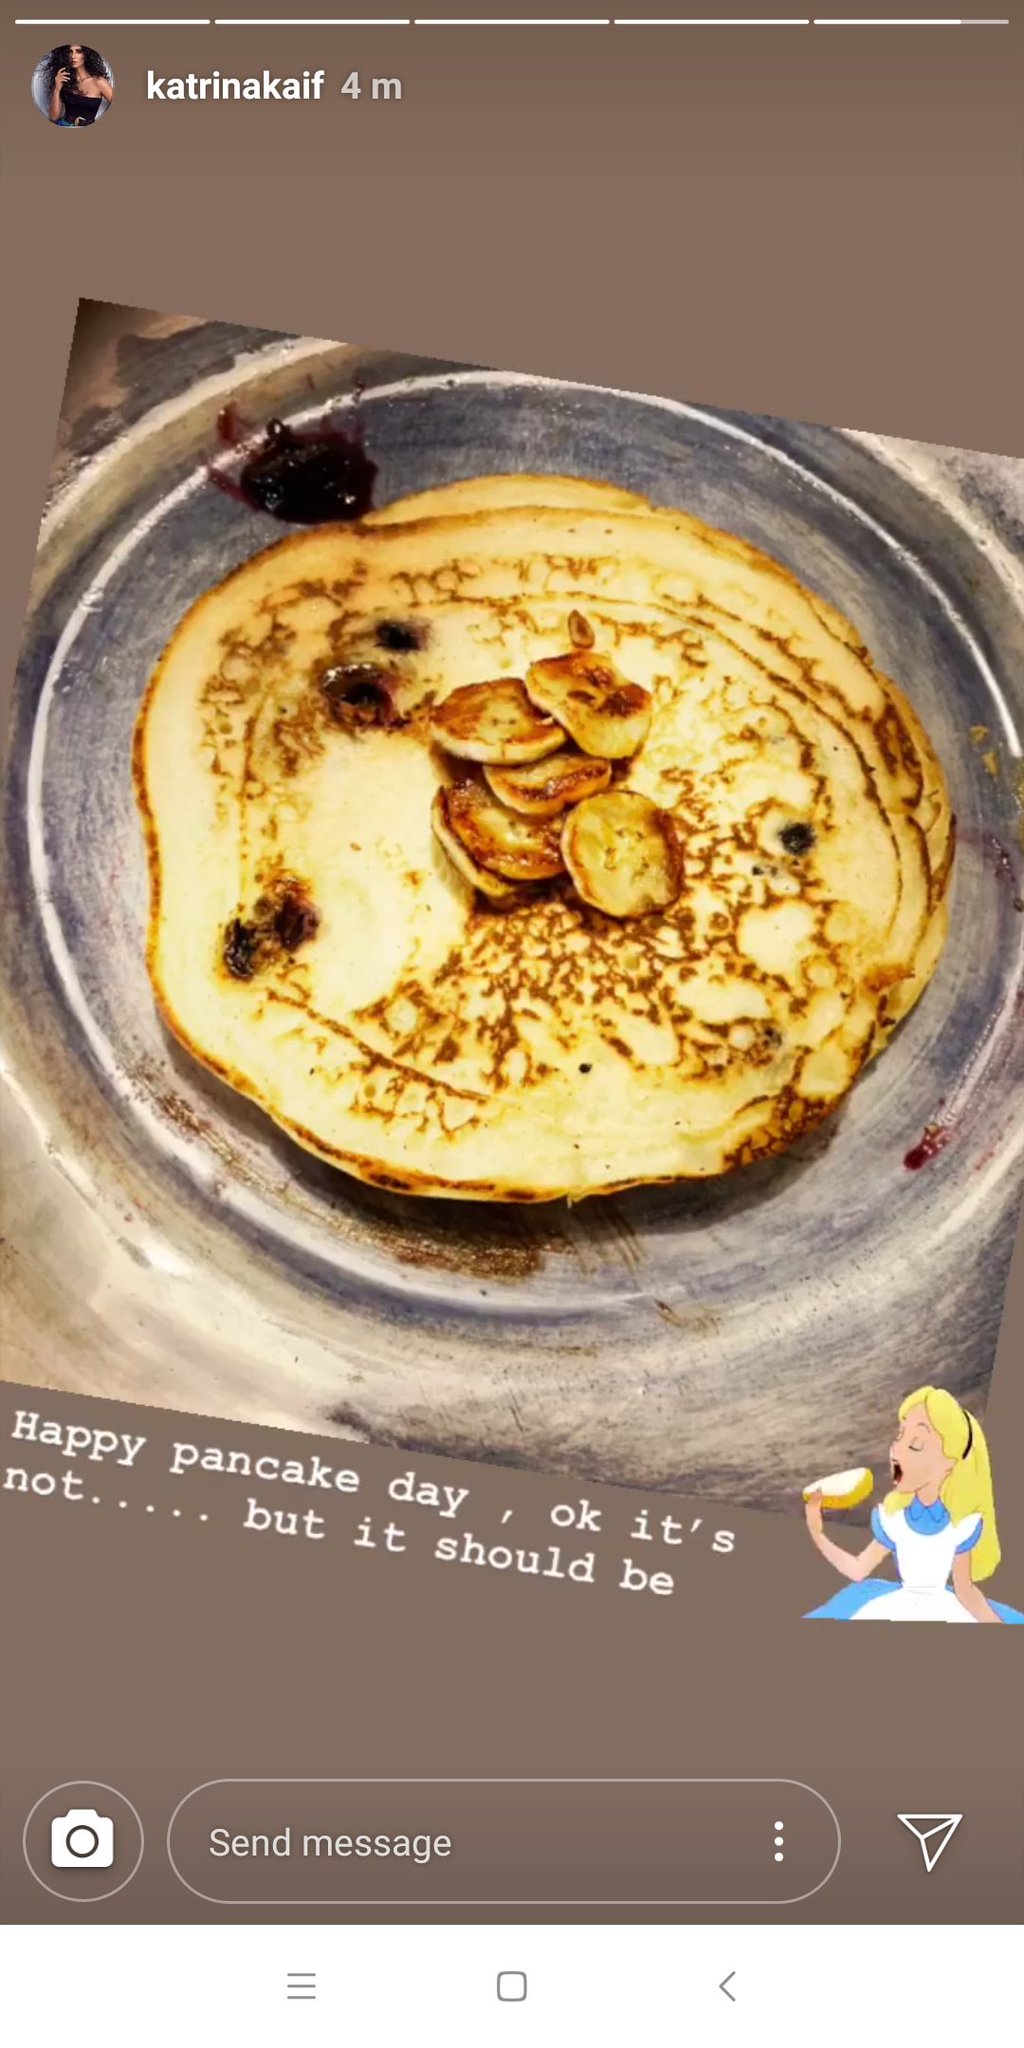 sanghamitra on Twitter: "Her true love ??? pancake ??? #katrinakaif… "